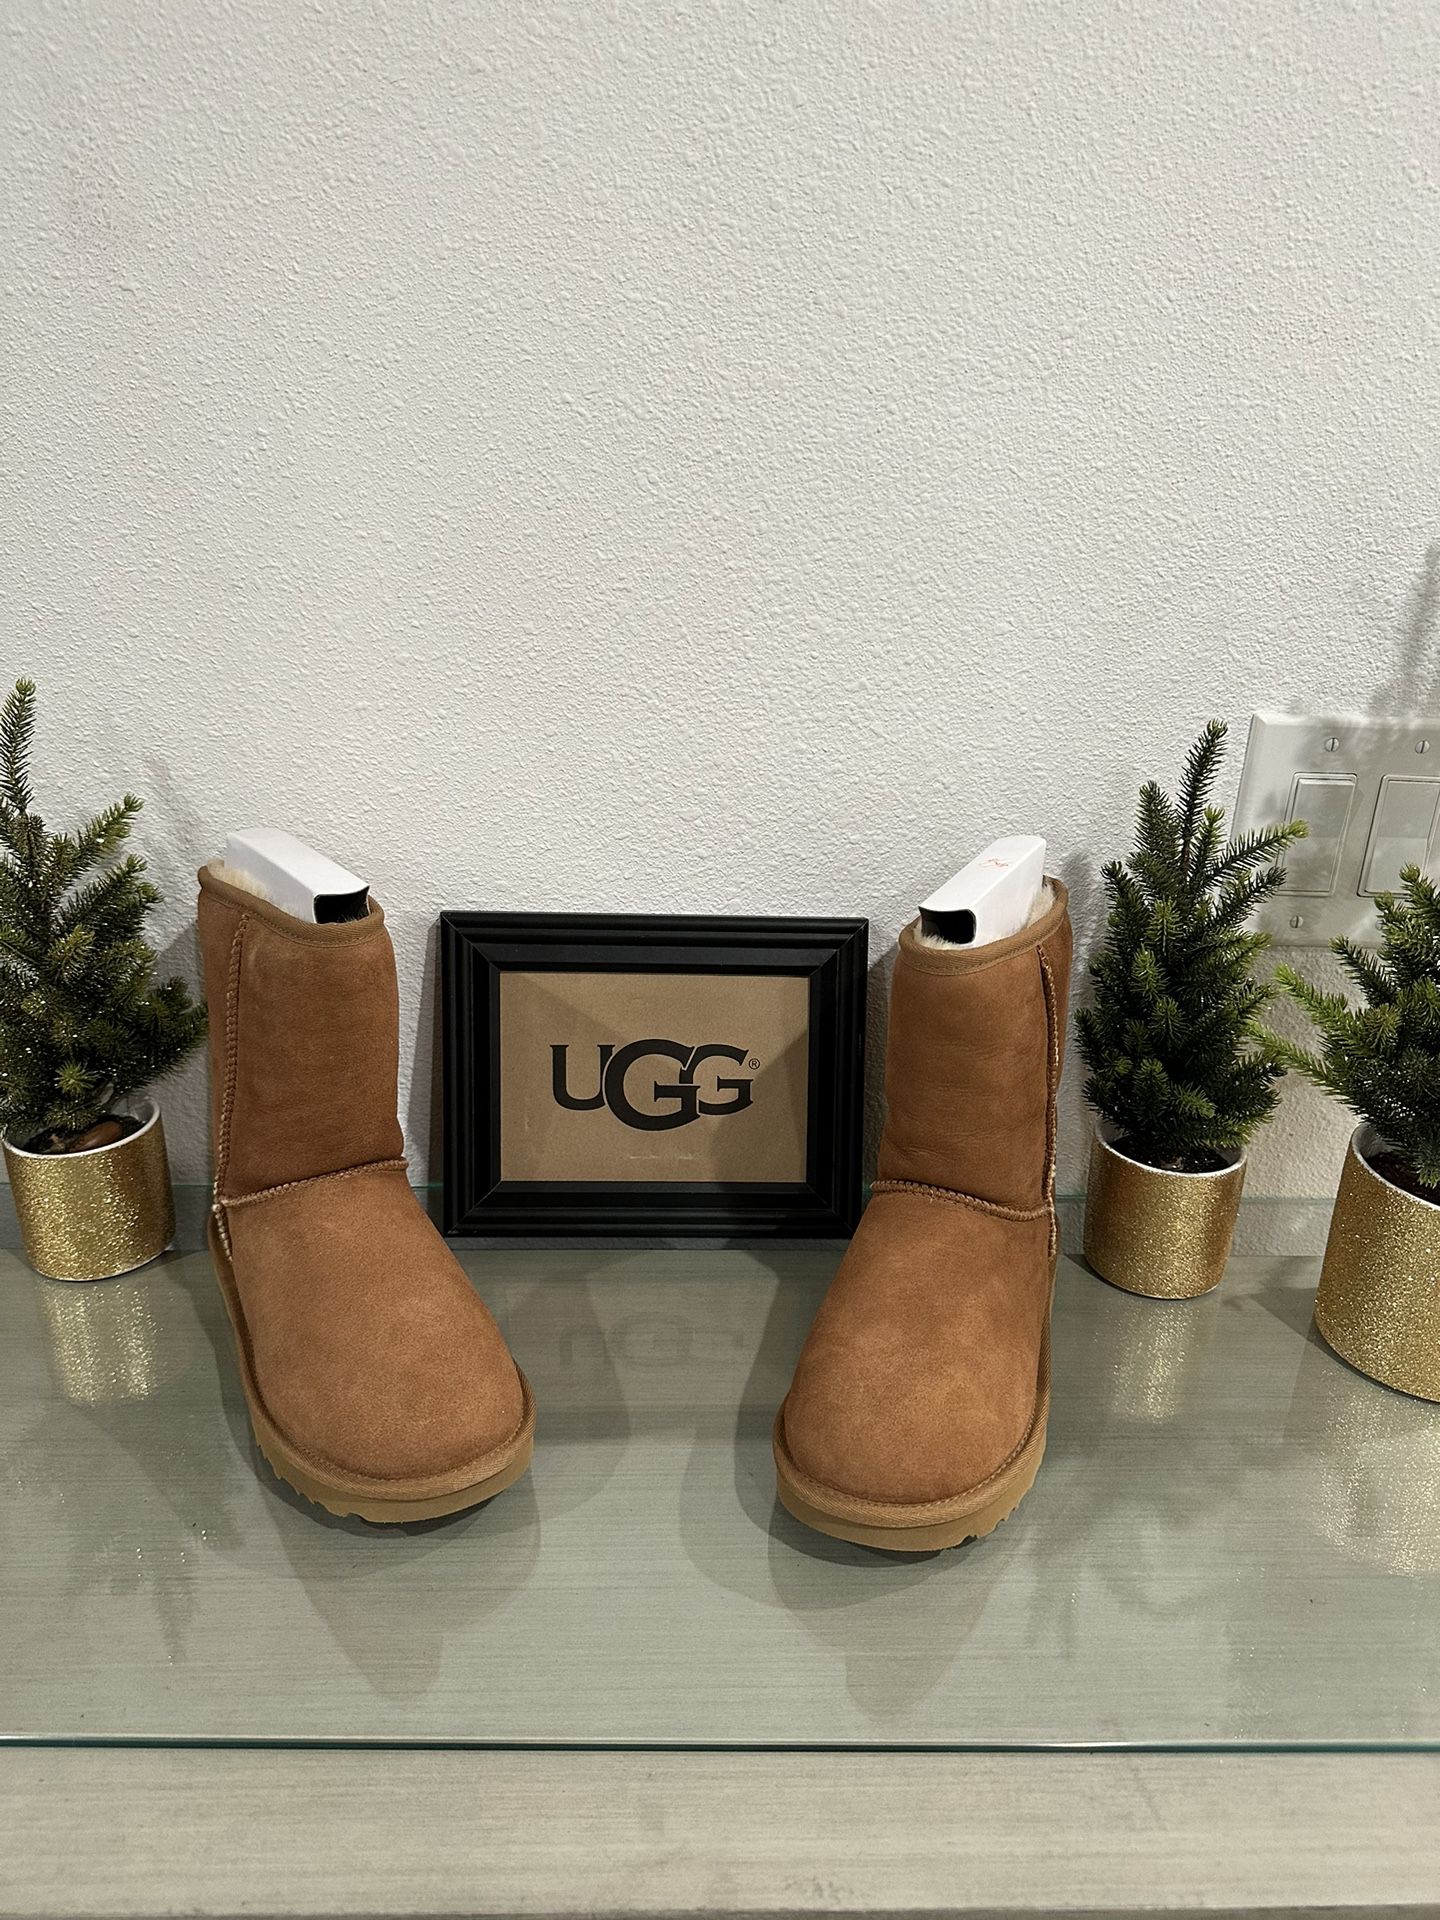 New UGG Women’s Classic Short Boot II Size 10